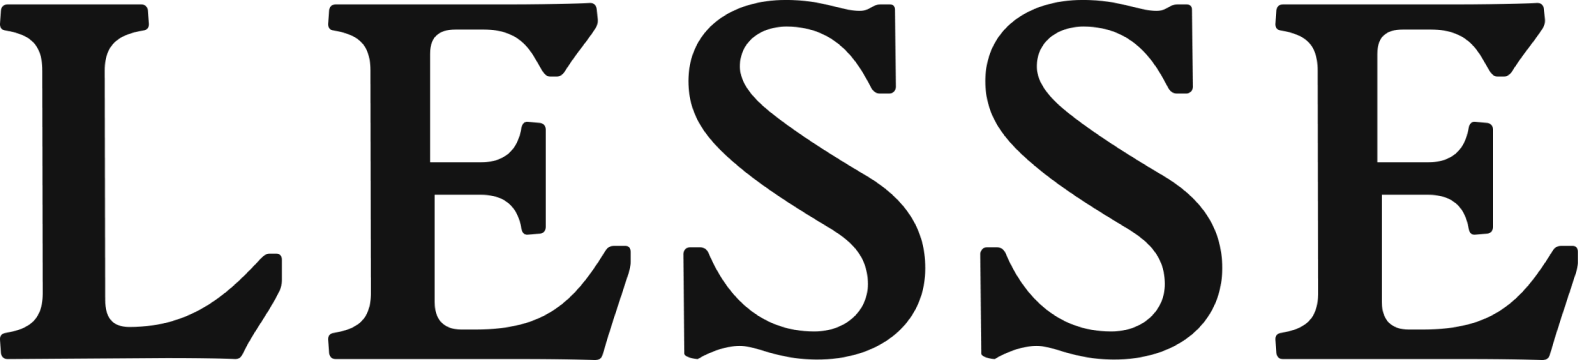 LESSE logo